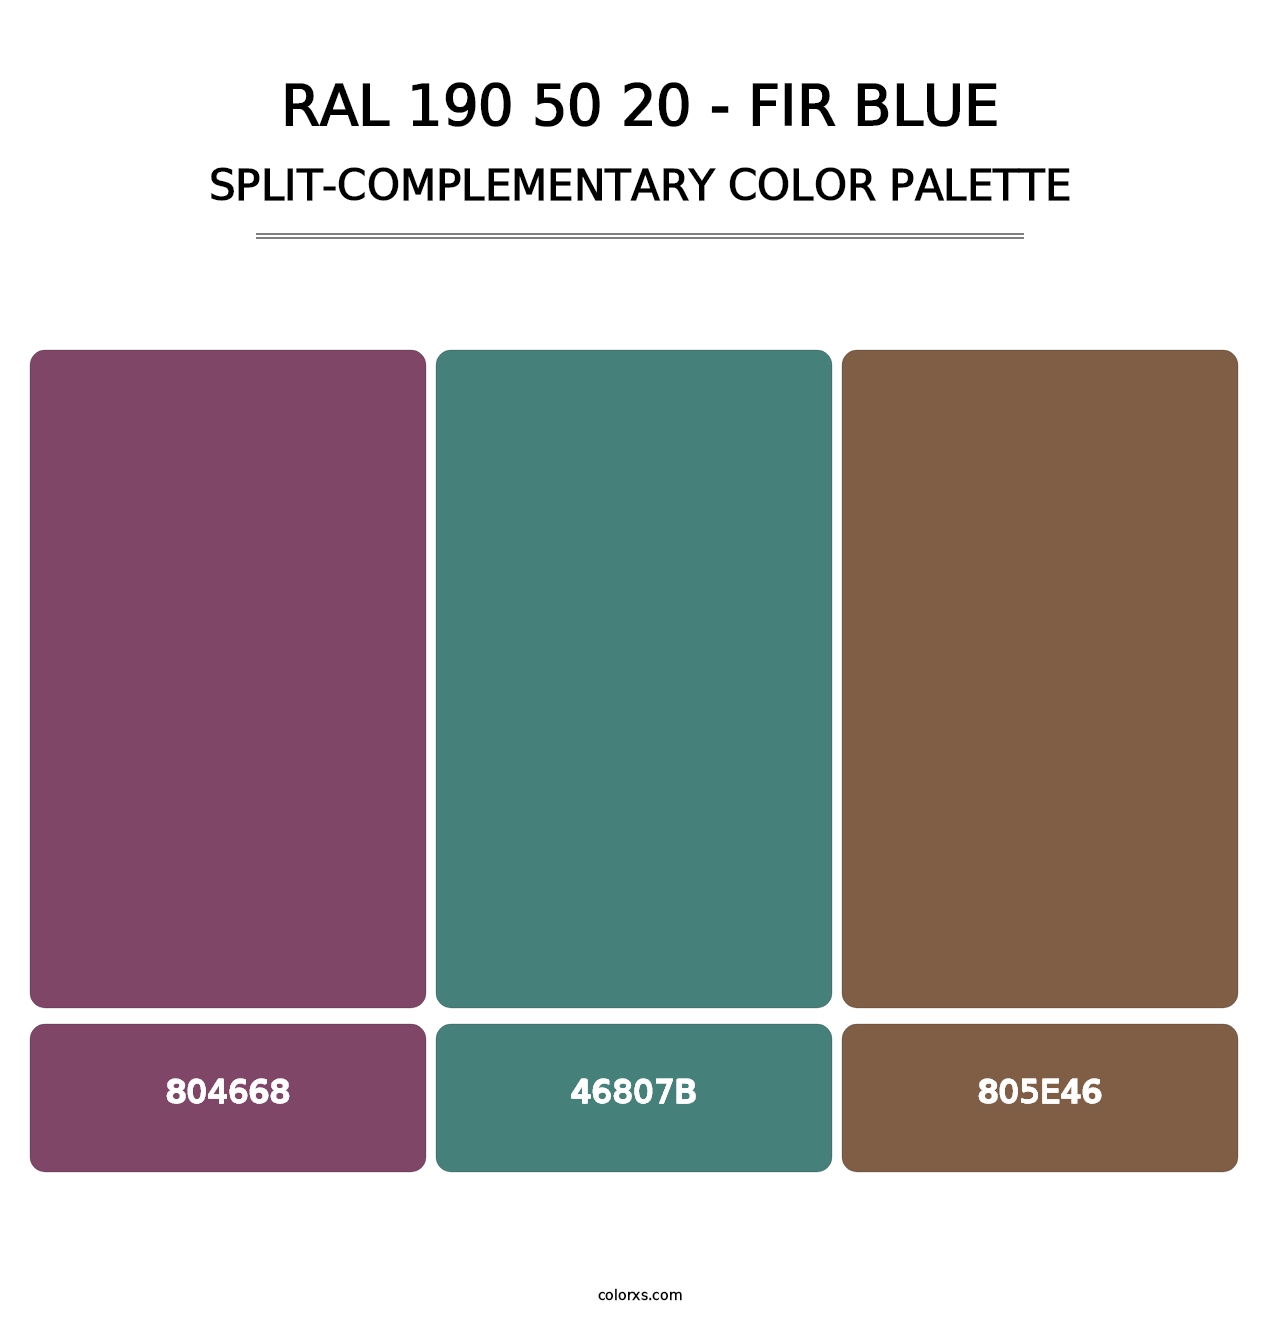 RAL 190 50 20 - Fir Blue - Split-Complementary Color Palette